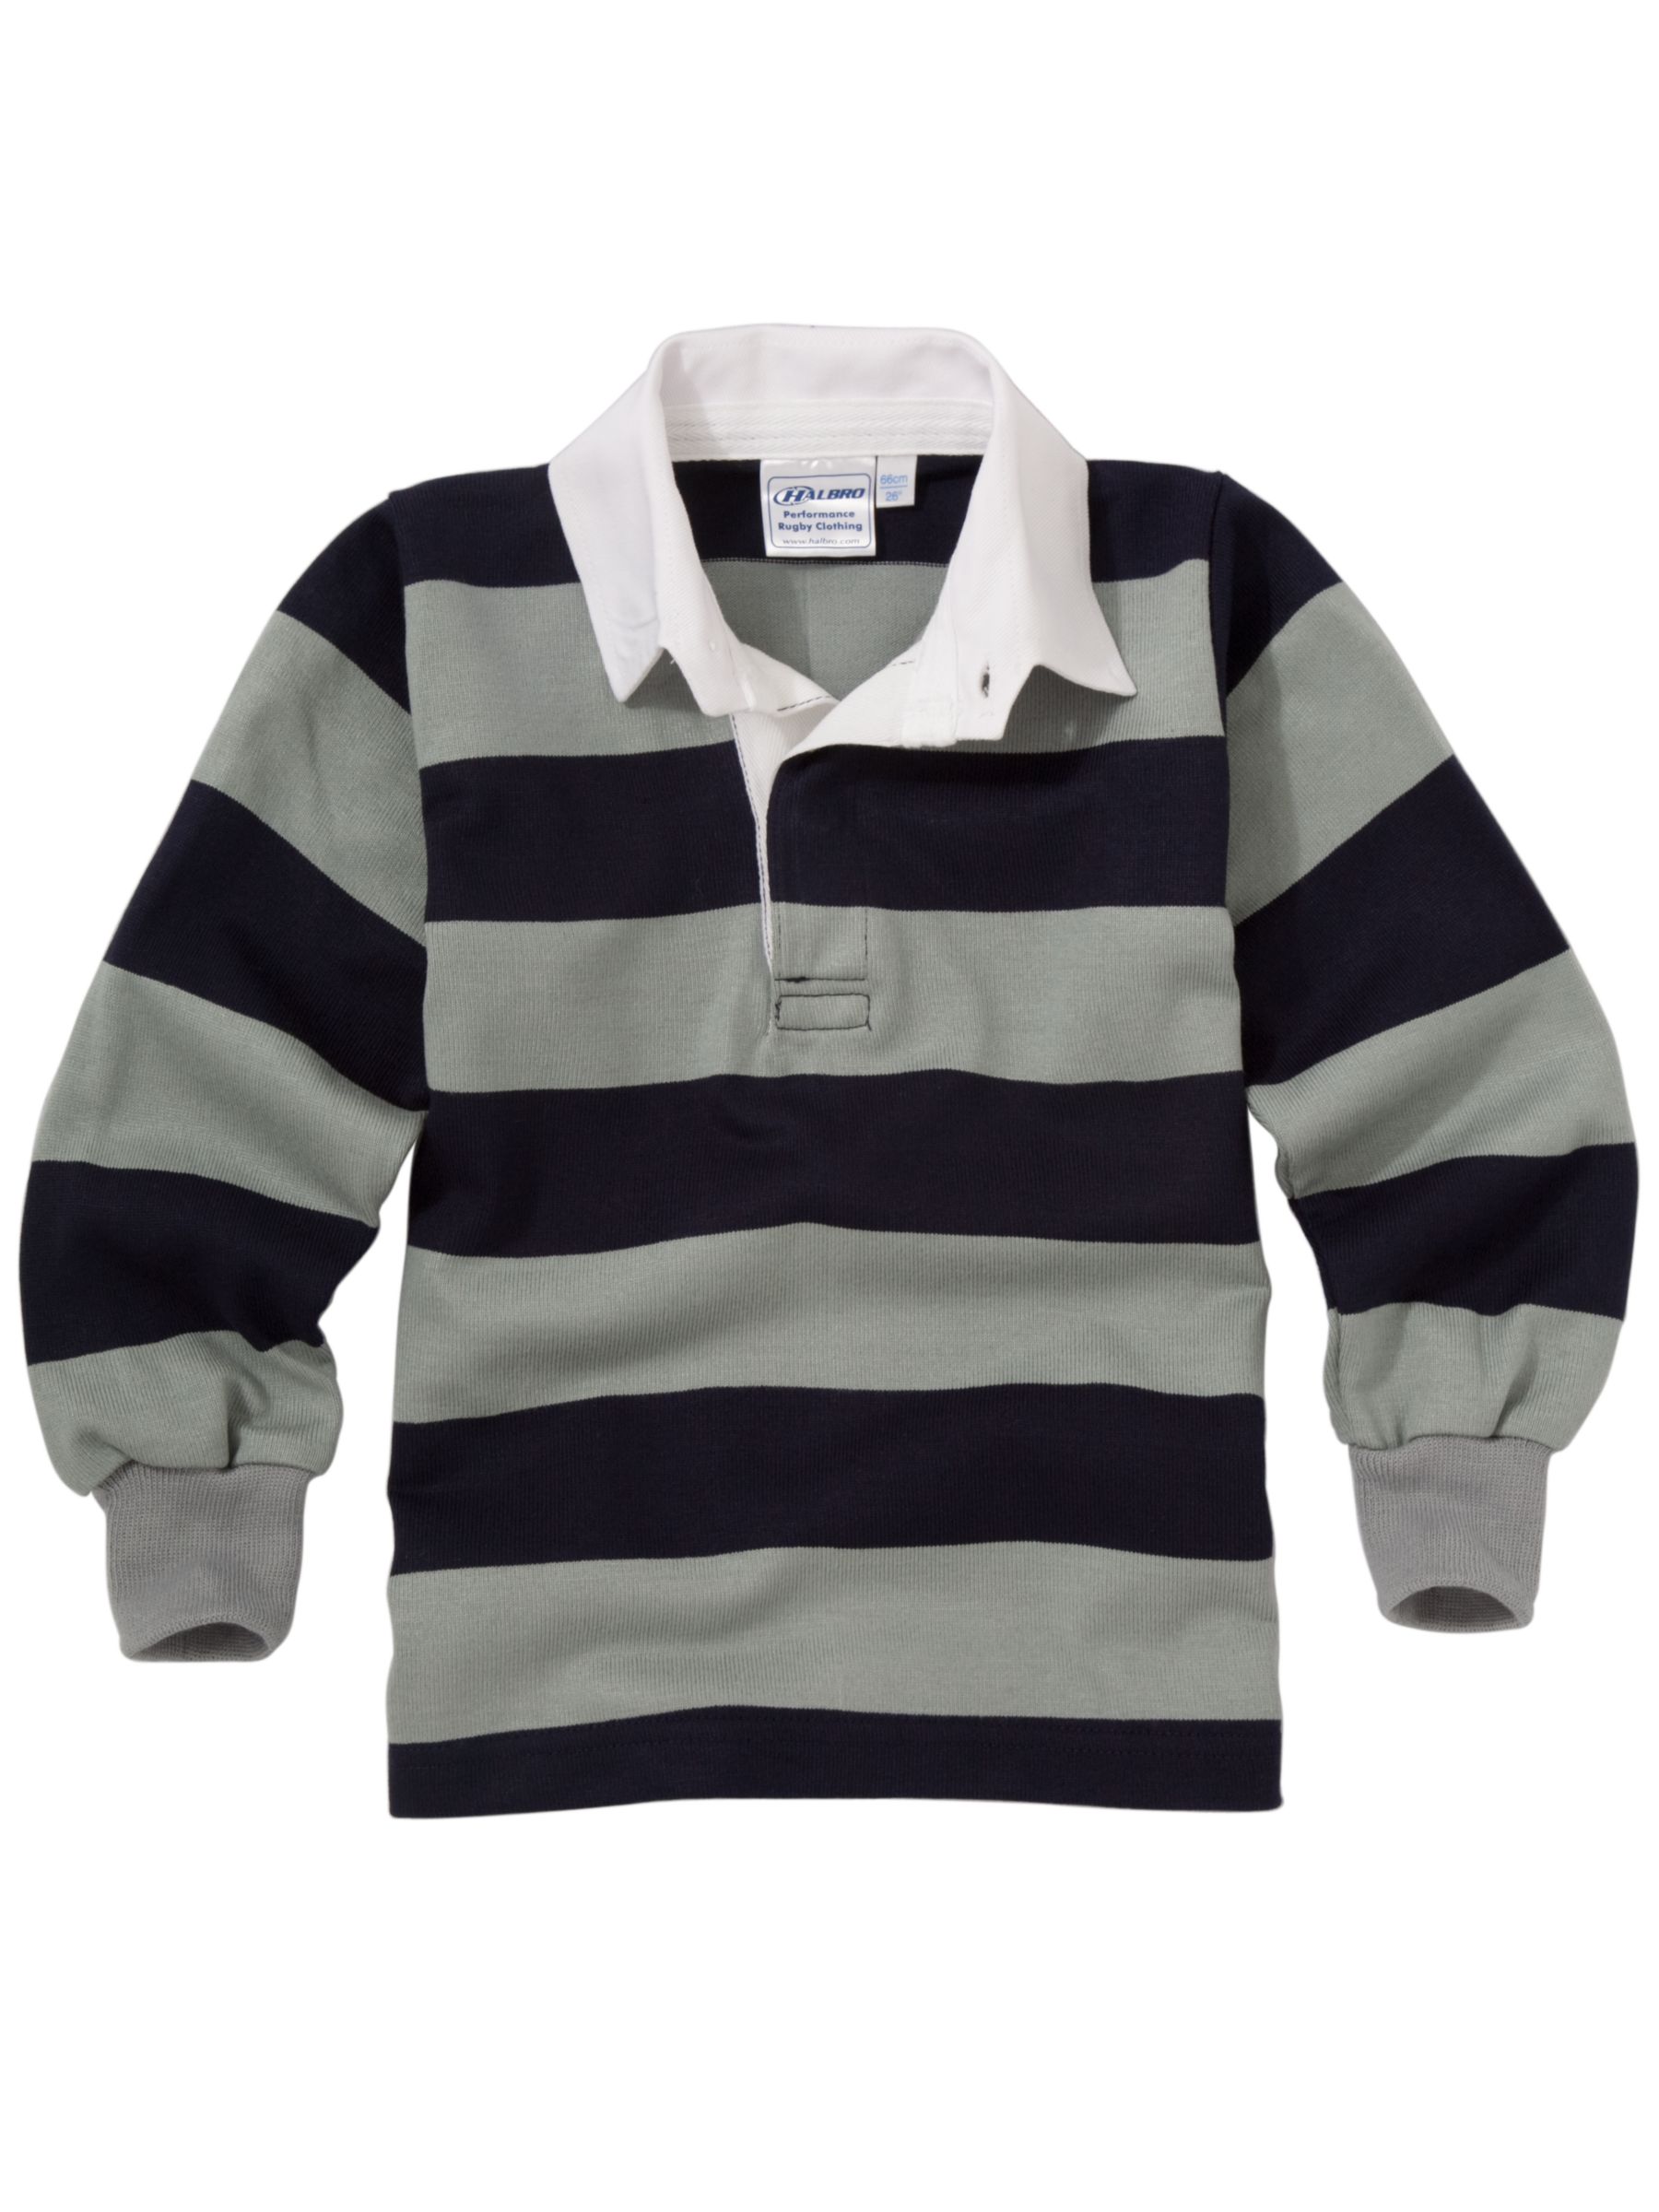 John Lewis School Unisex Sports Rugby Shirt, Navy/grey